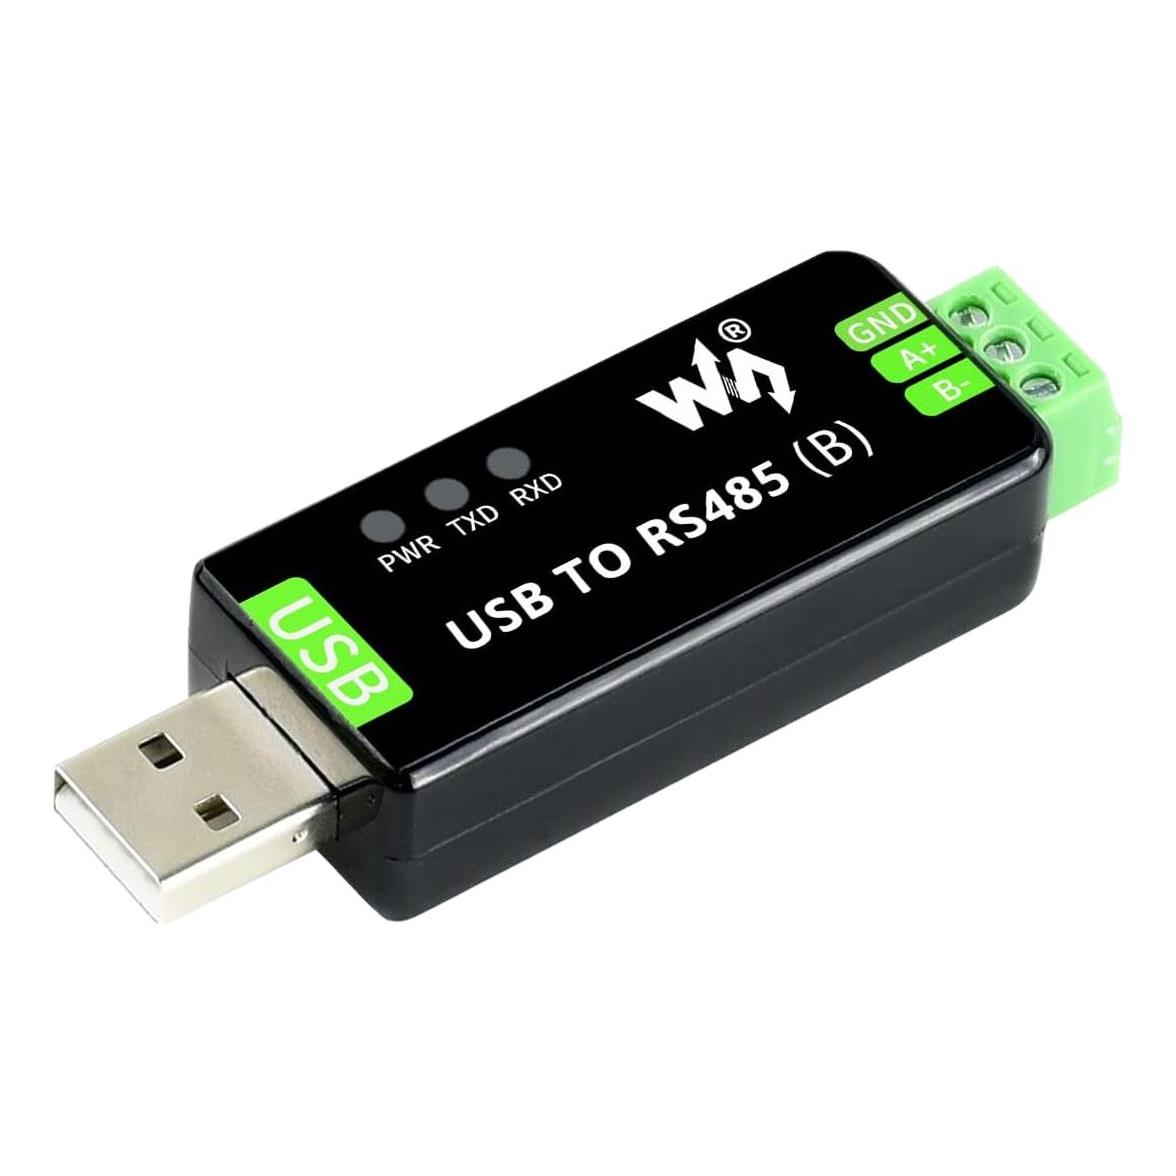 【EA 9790-USB485】USB - RS485 ADAPTOR